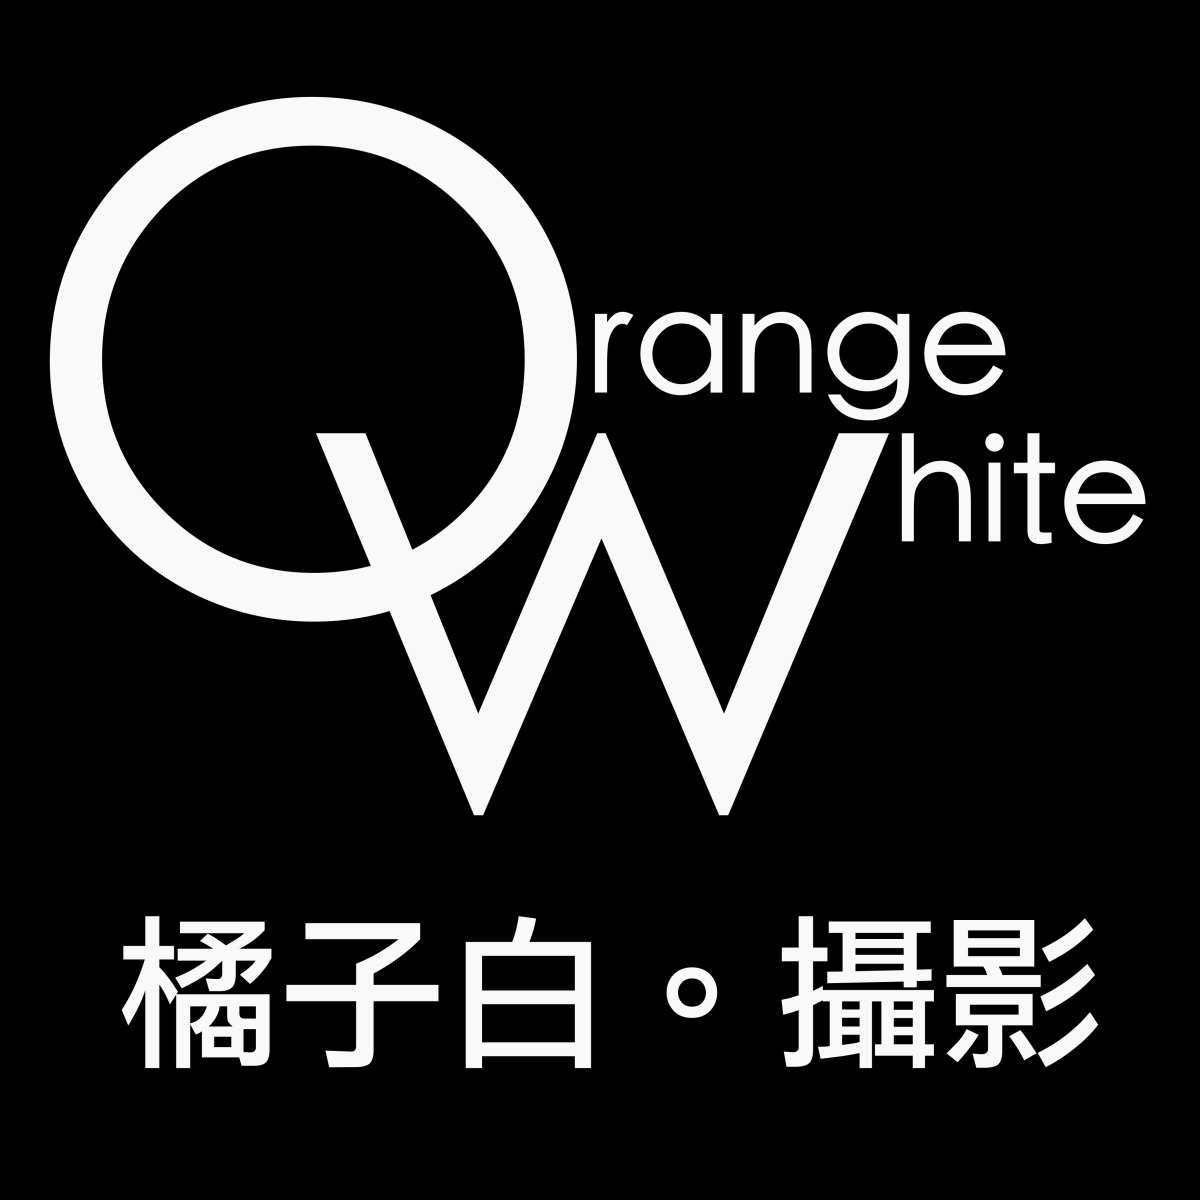 cropped logojpg logo | 橘子白攝影